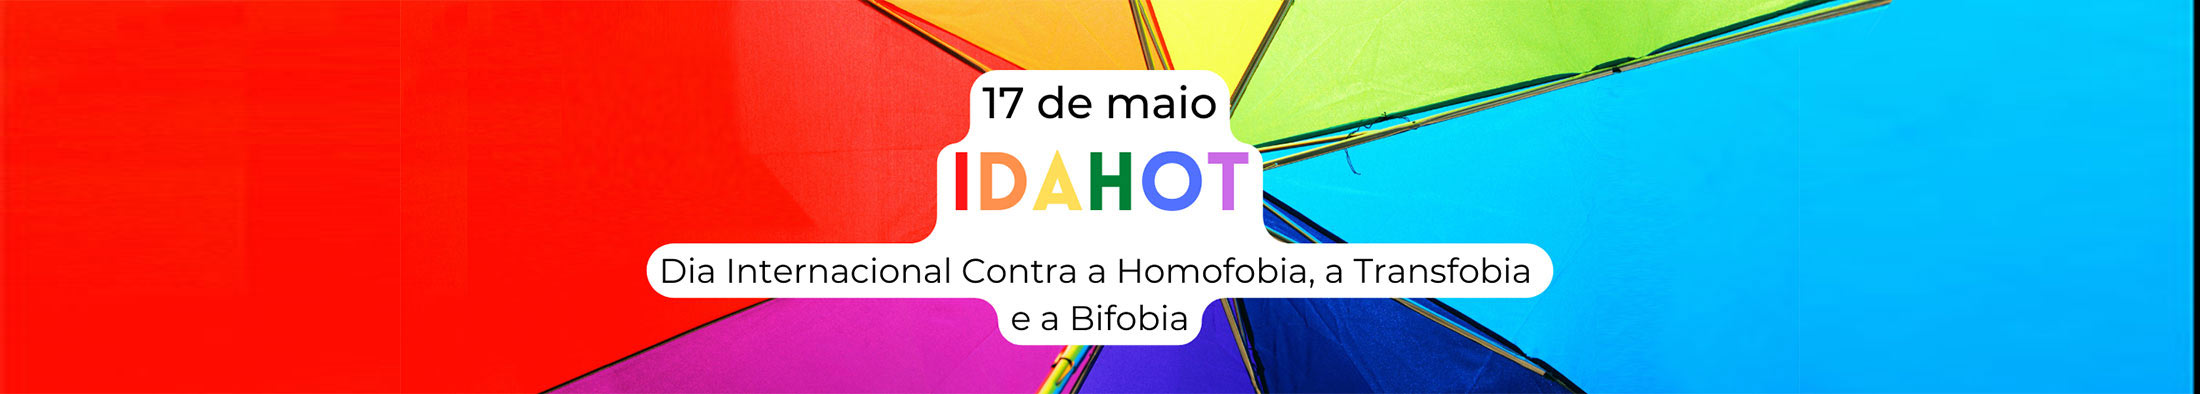 17 de maio - IDAHOT - Dia Internacional Contra a Homofobia, a Transfobia e a Bifobia